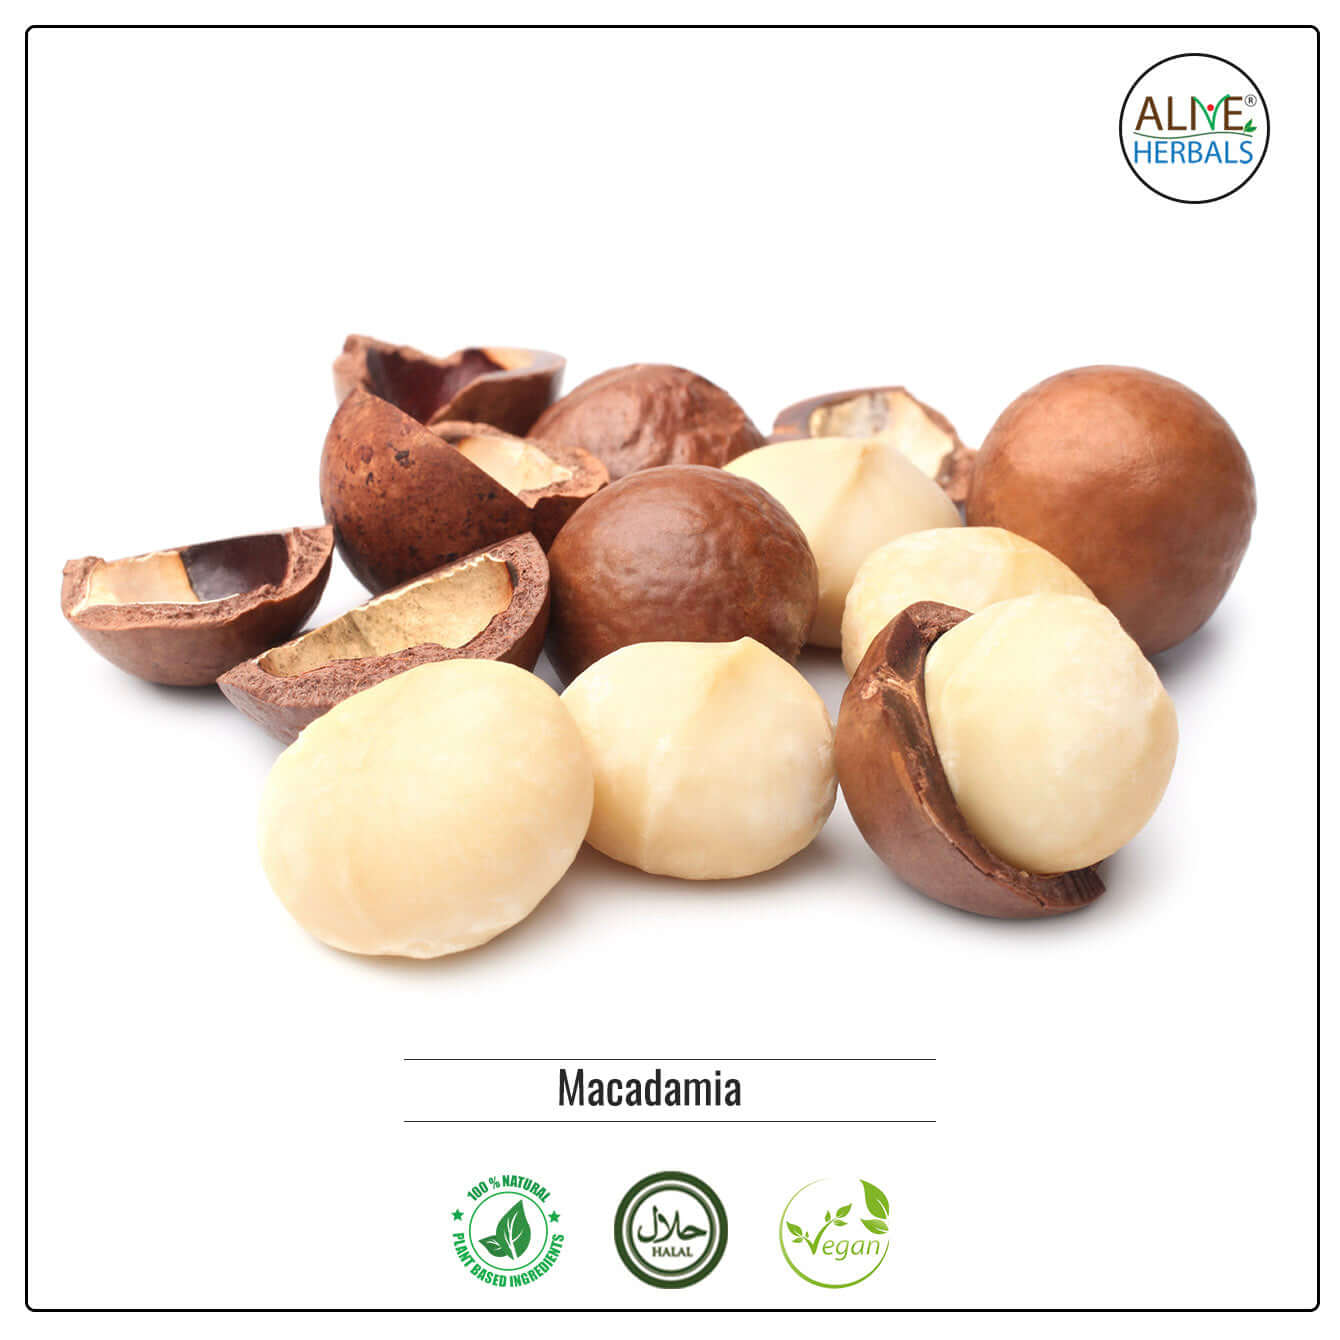 Raw Macadamia Nuts - Buy at Natural Food Store | Alive Herbals.